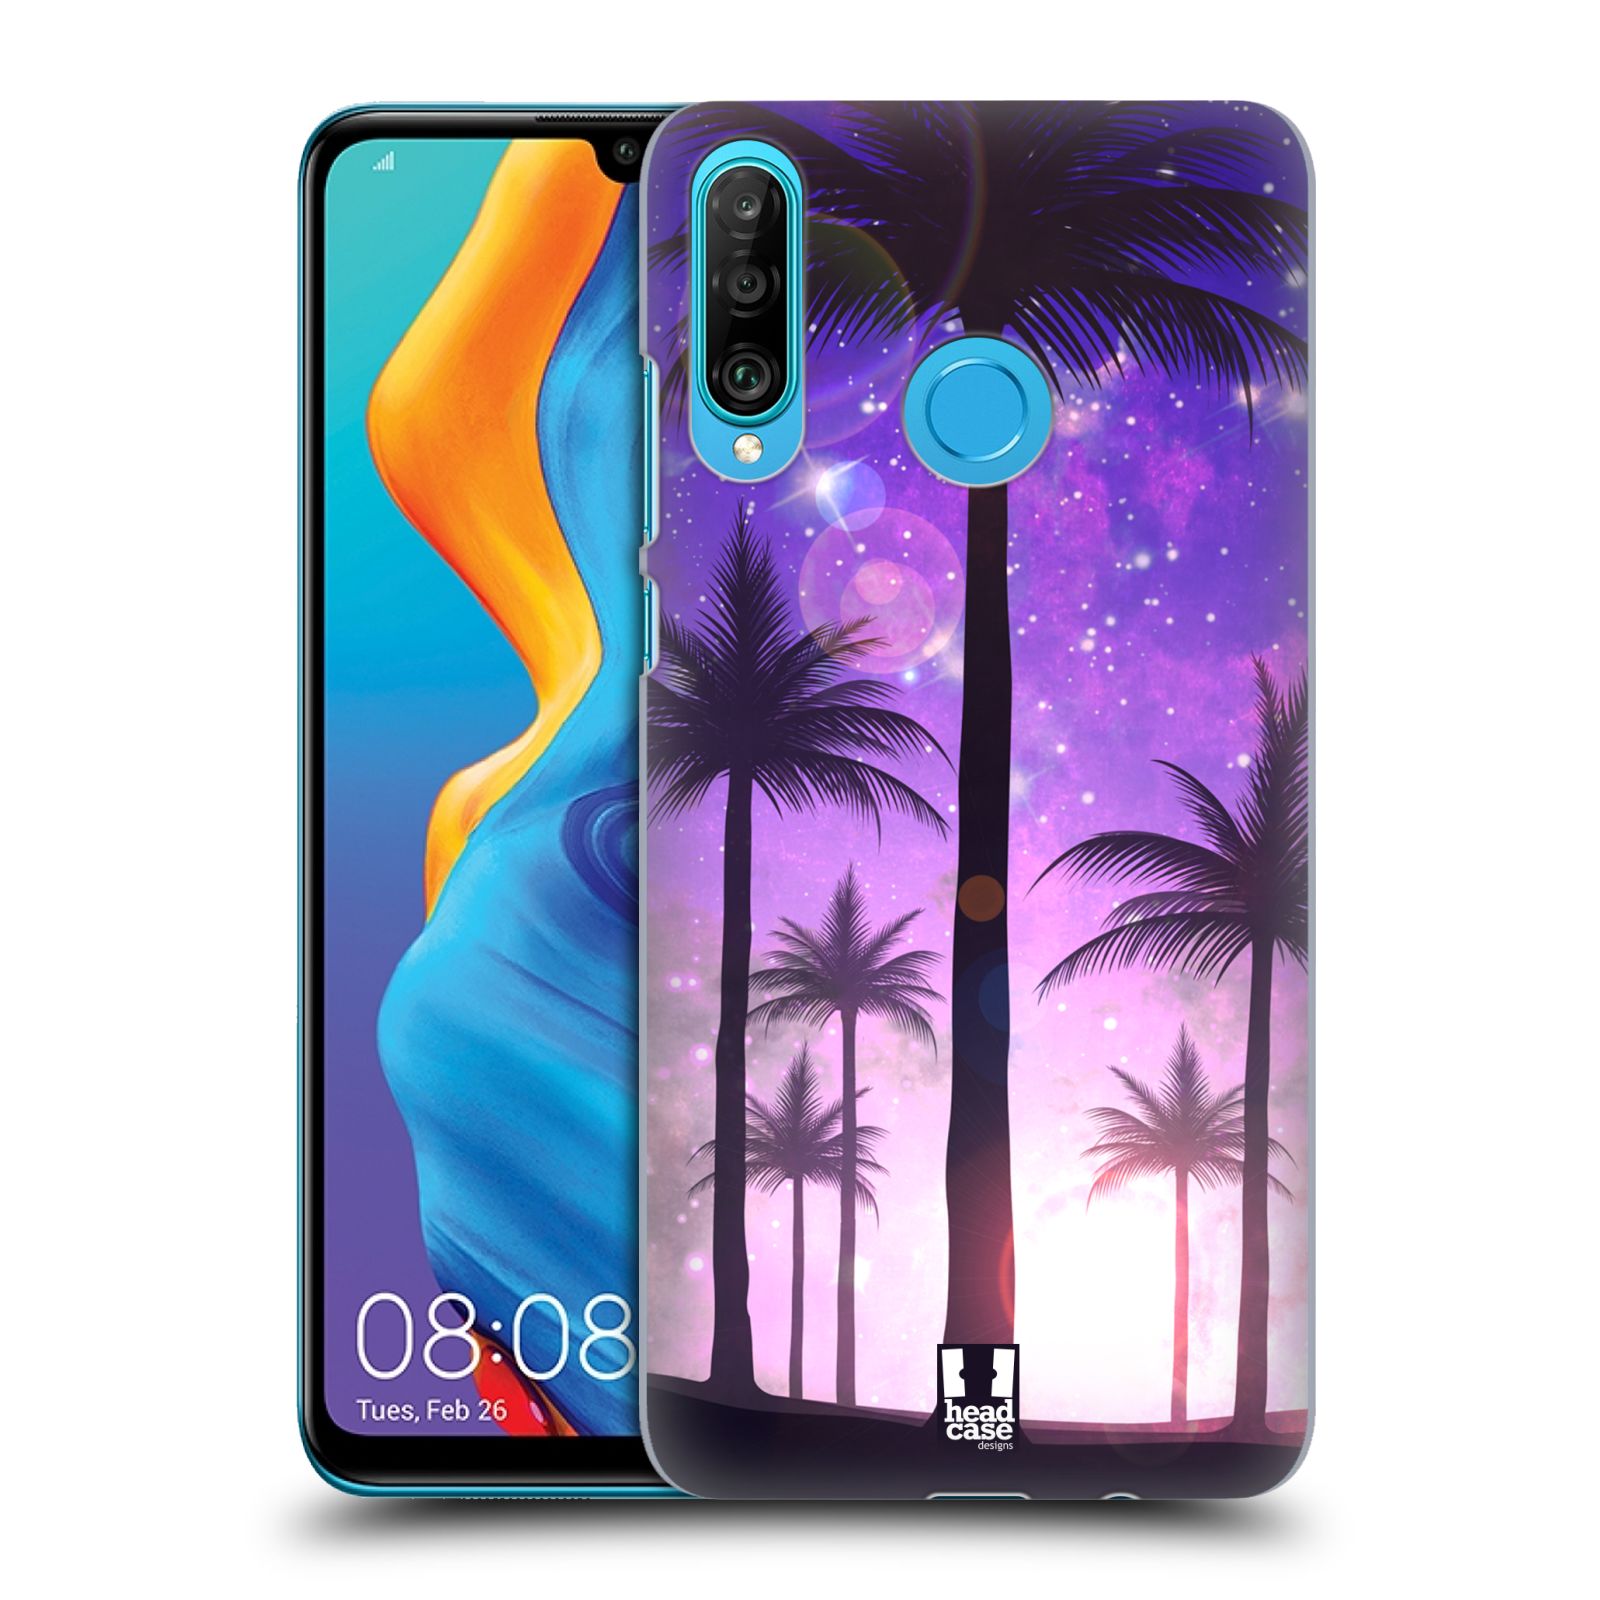 Pouzdro na mobil Huawei P30 LITE - HEAD CASE - vzor Kreslený motiv silueta moře a palmy FIALOVÁ